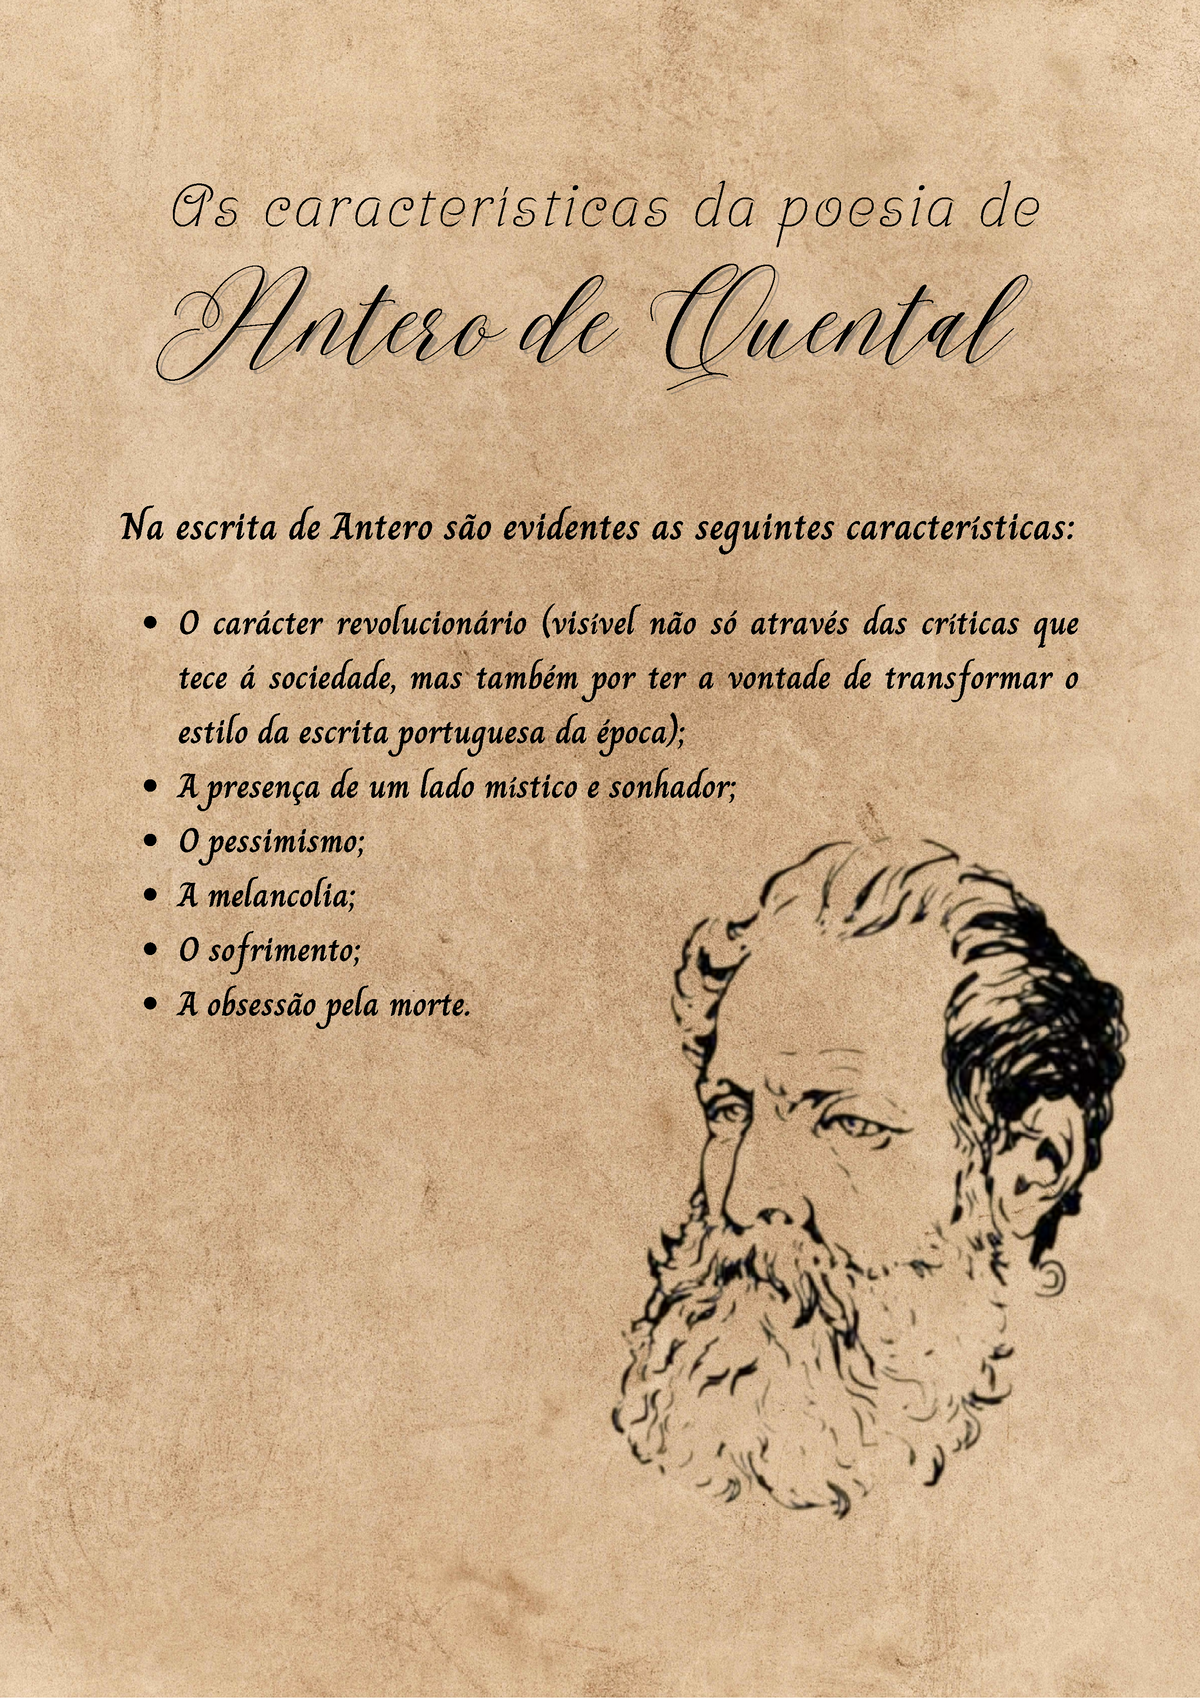 Poesia - Antero de Quental, A História by Sigillum PT - Issuu